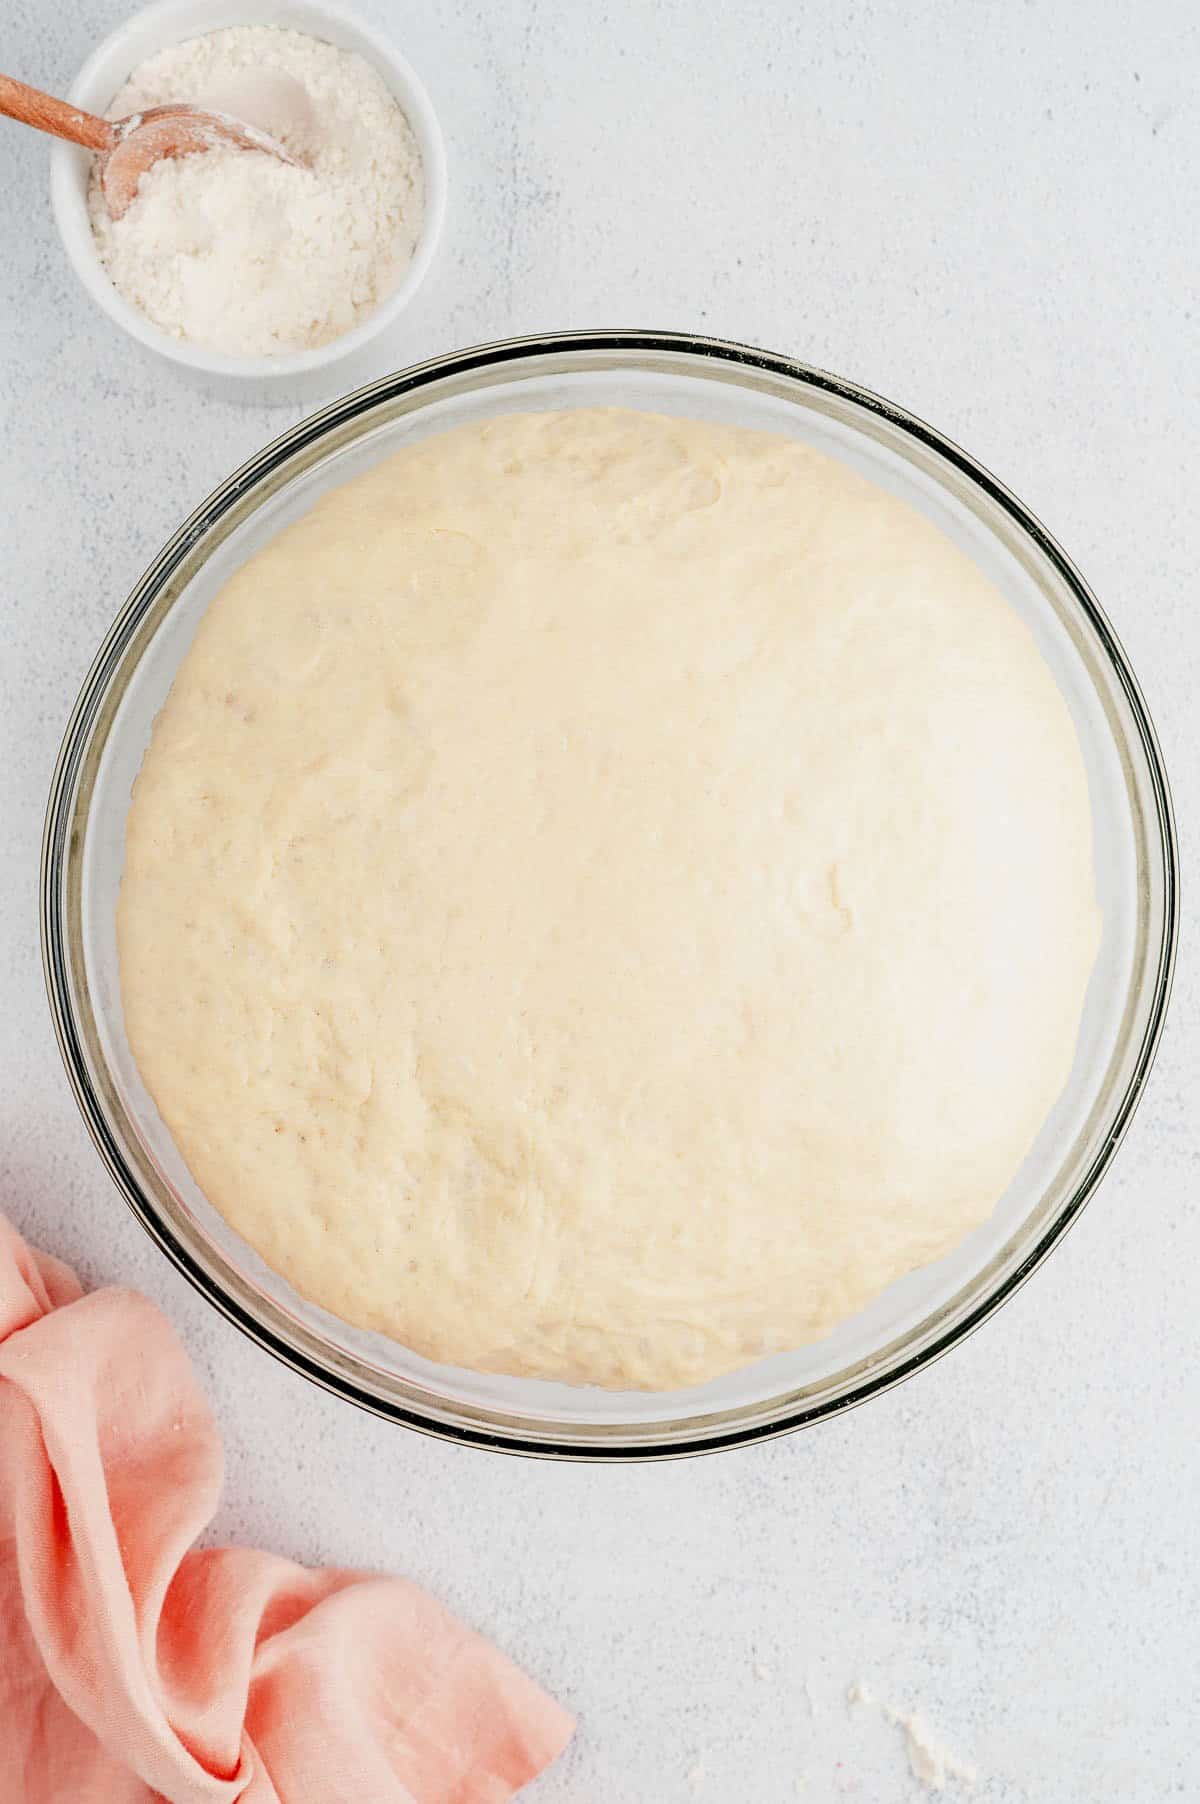 Risen cinnamon roll dough in a large glass bowl.